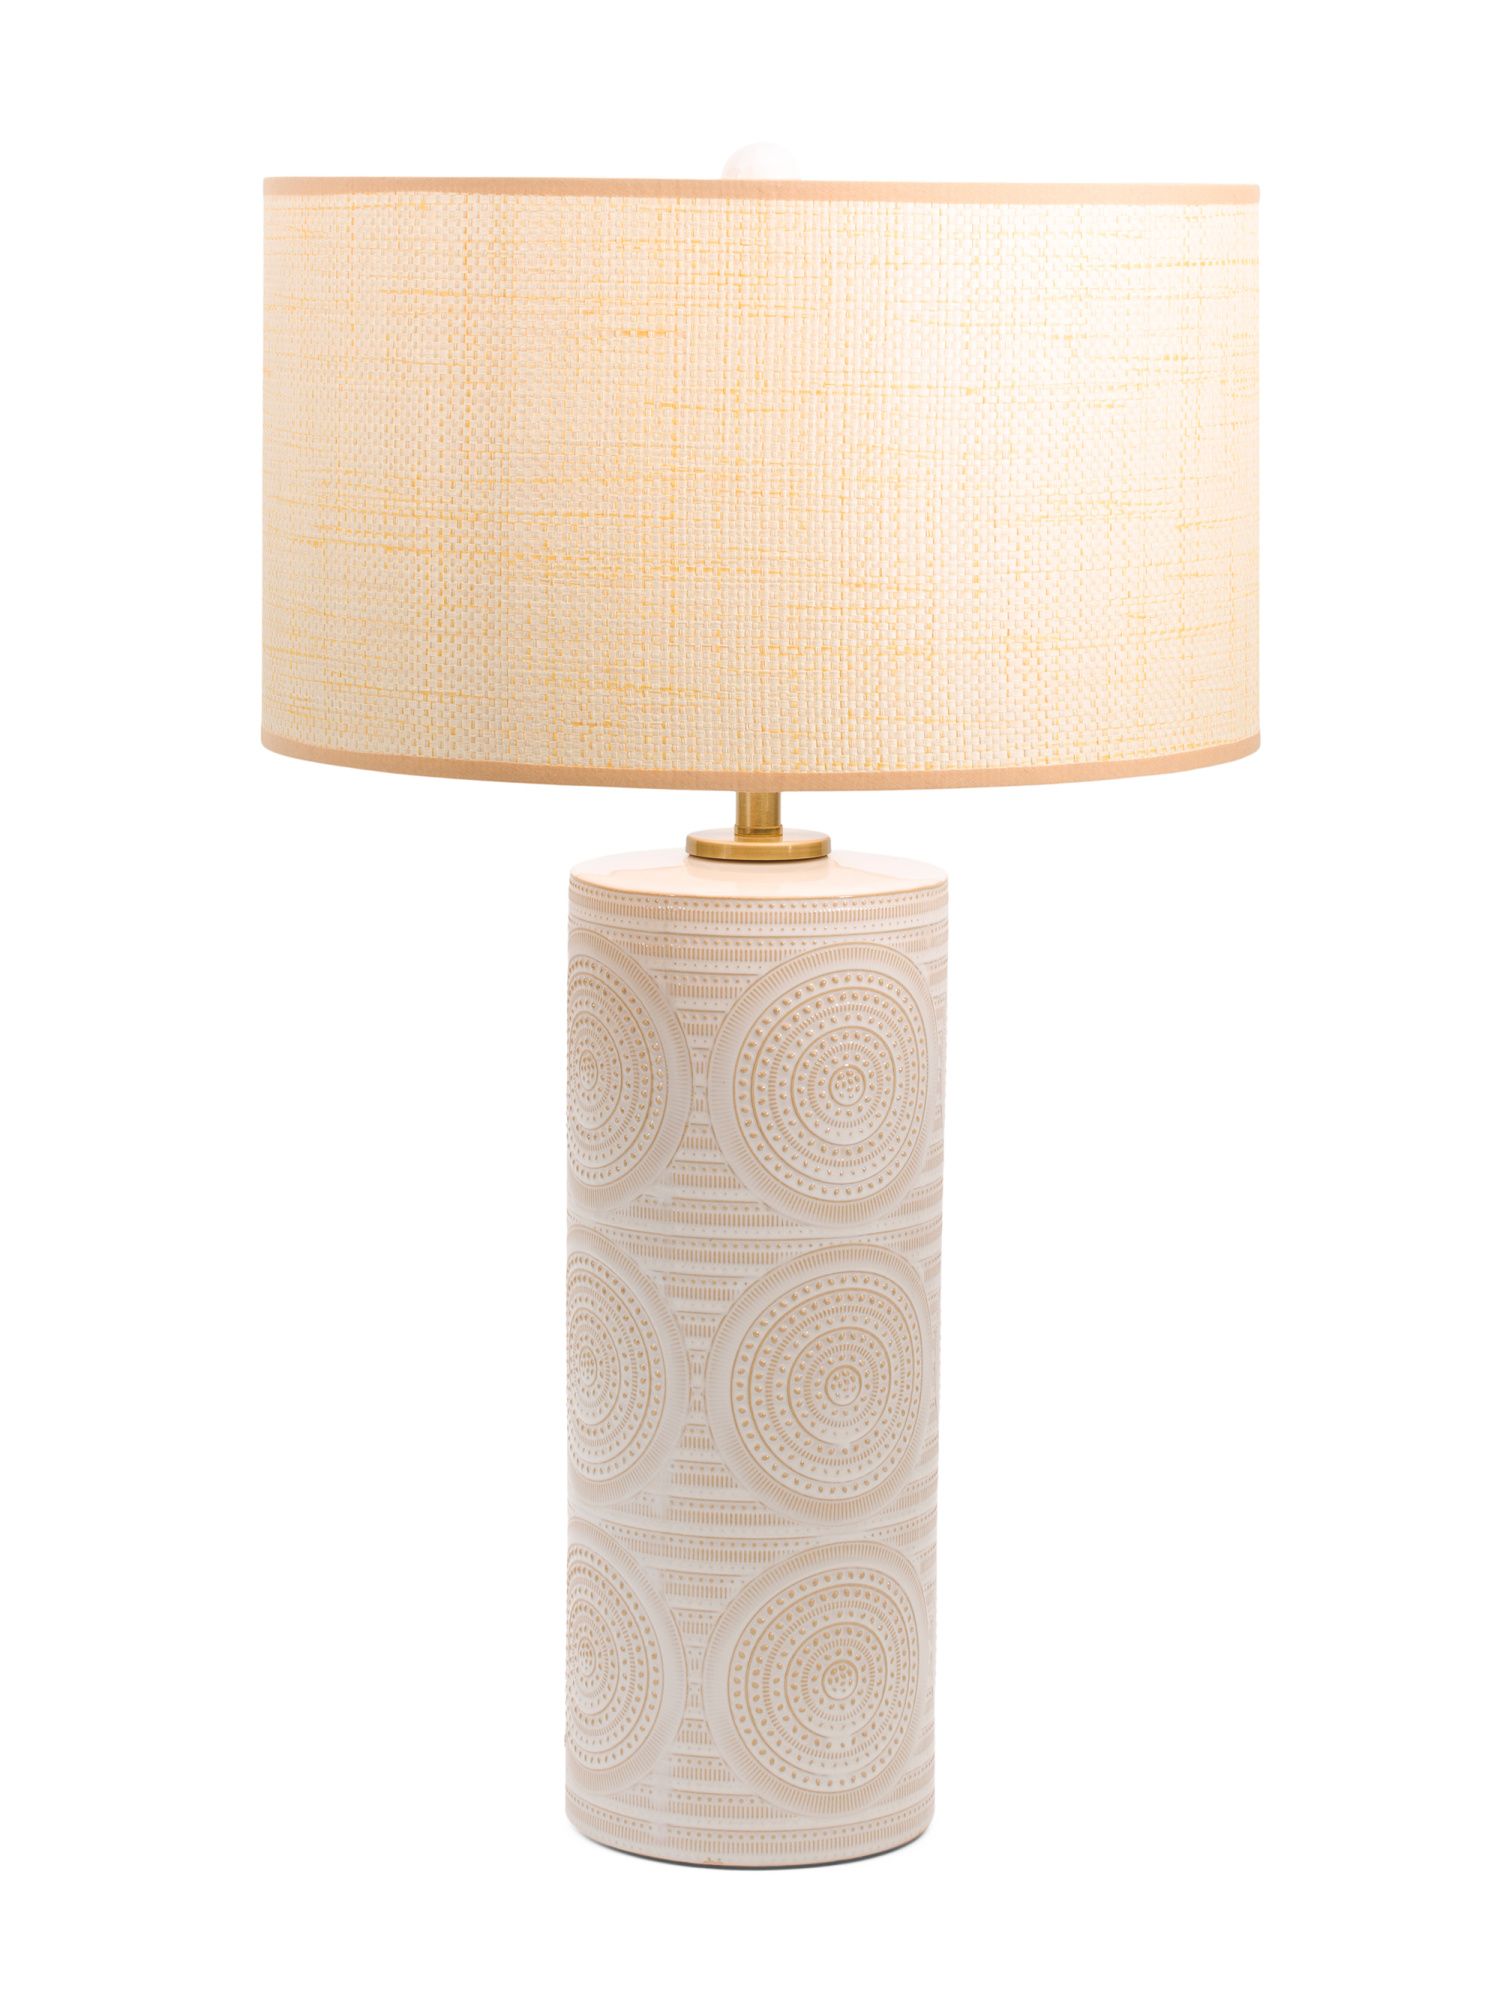 Textured Ceramic Table Lamp | TJ Maxx